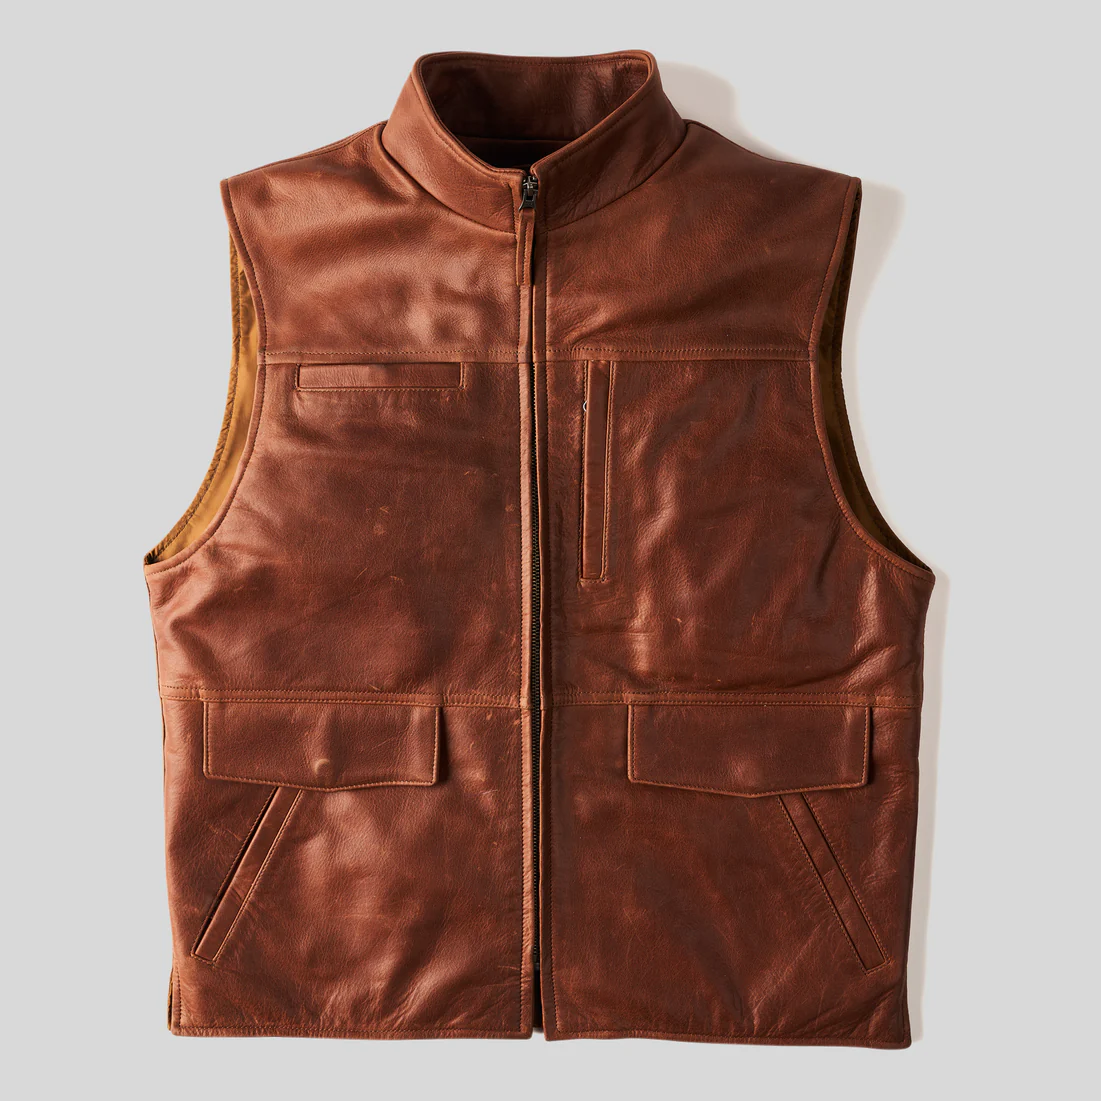 Leather Travel Vest